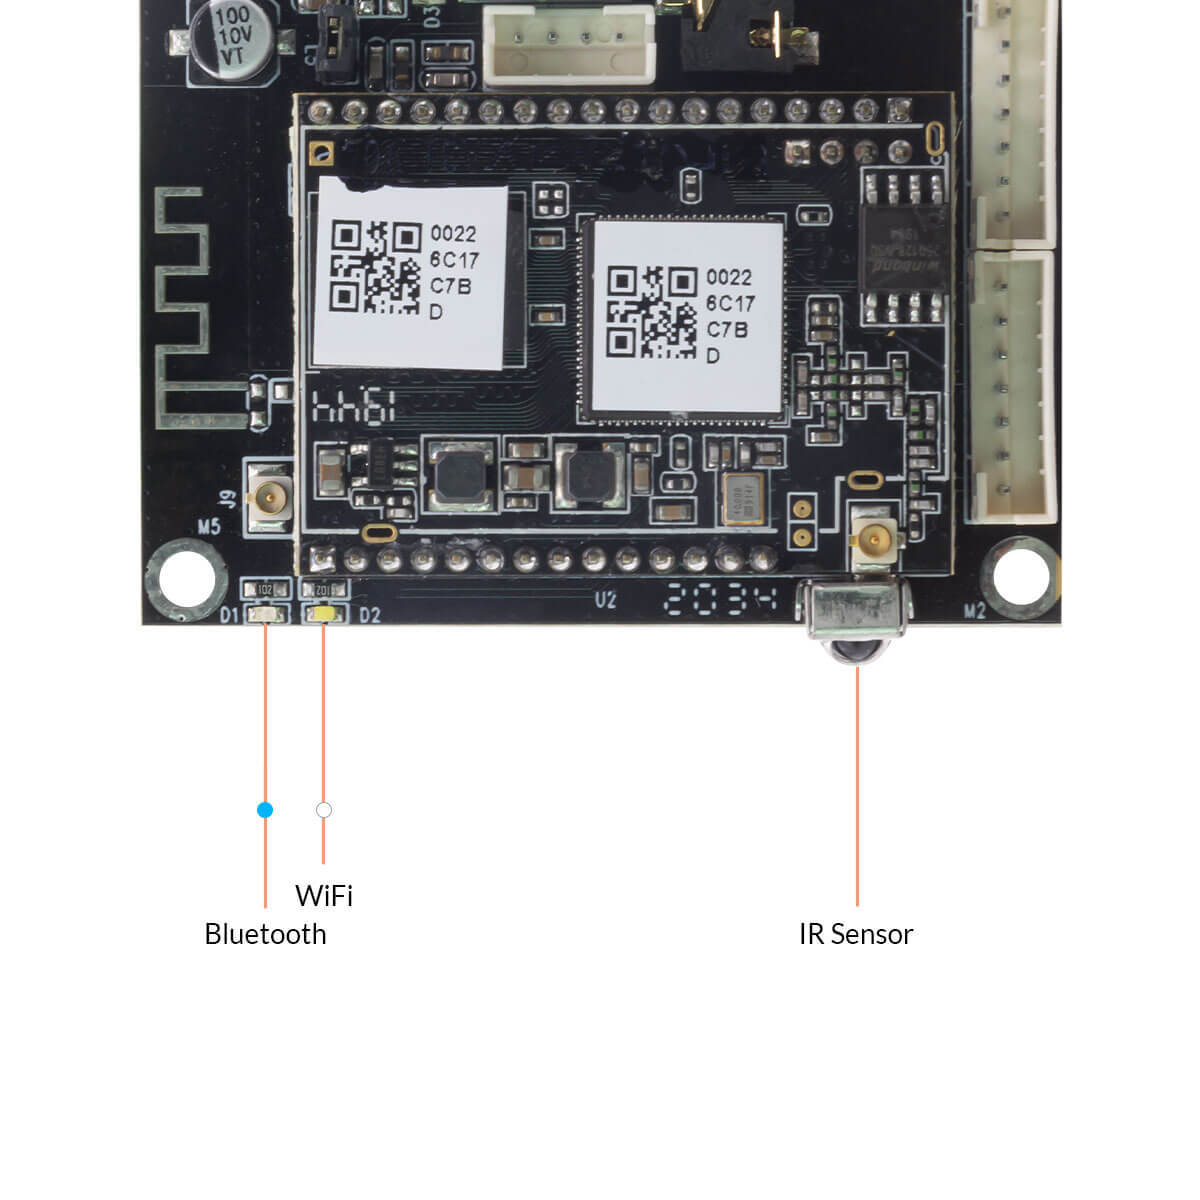 Up2Stream Mini - Multiroom Wi-Fi Streamer Board (No Amp) - Arylic